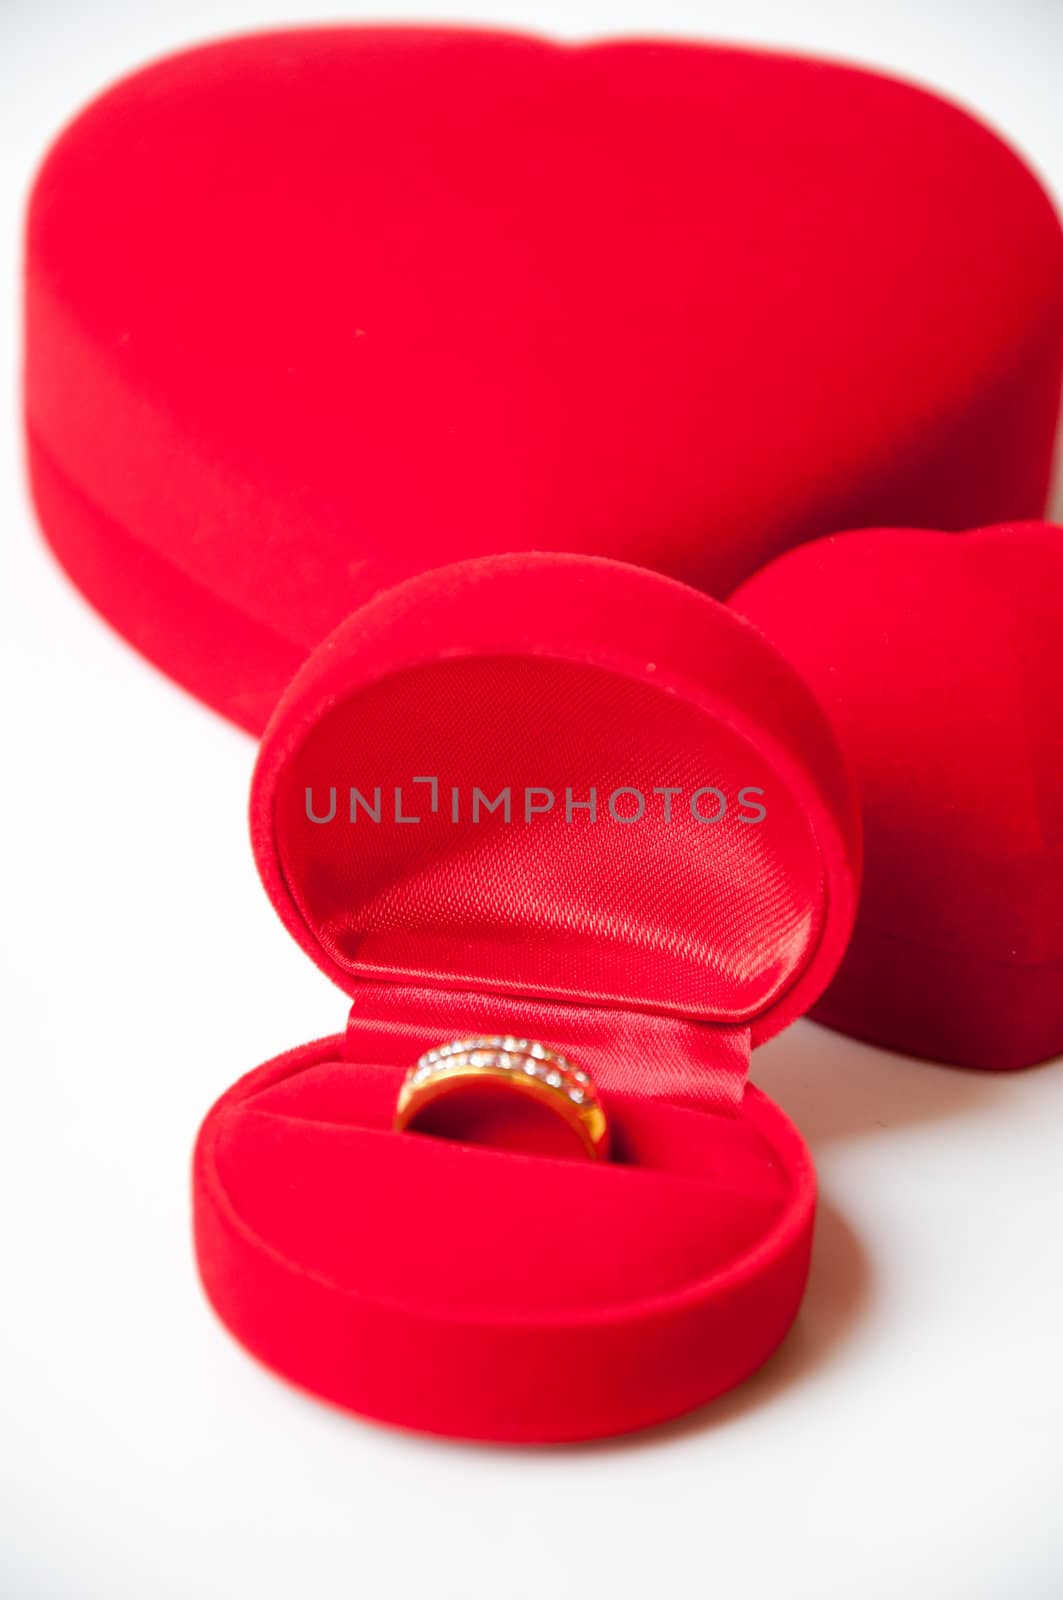 Wedding ring for love by buffaloboy